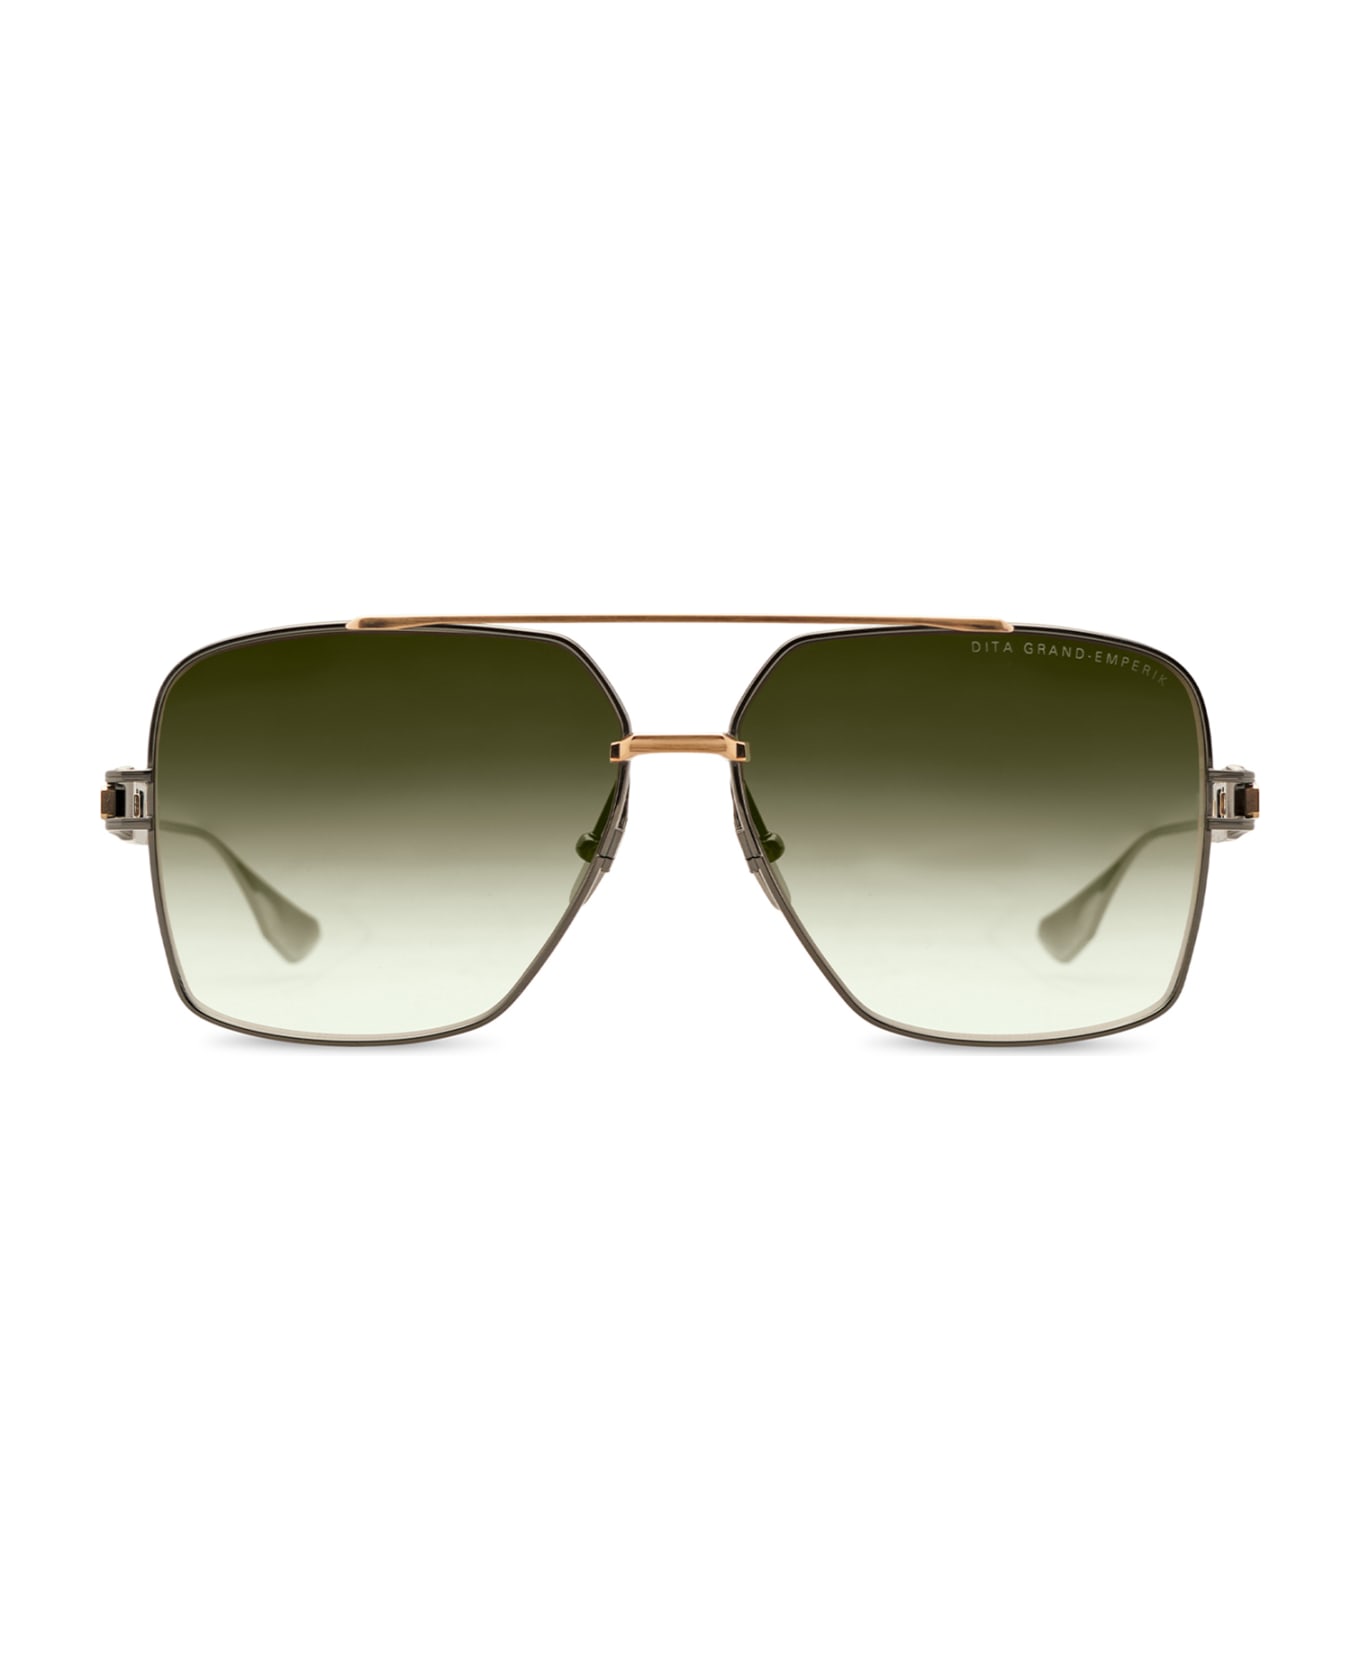 Dita DTS159/A/03 GRAND/EMPERIK Sunglasses - Black Rhodium サングラス